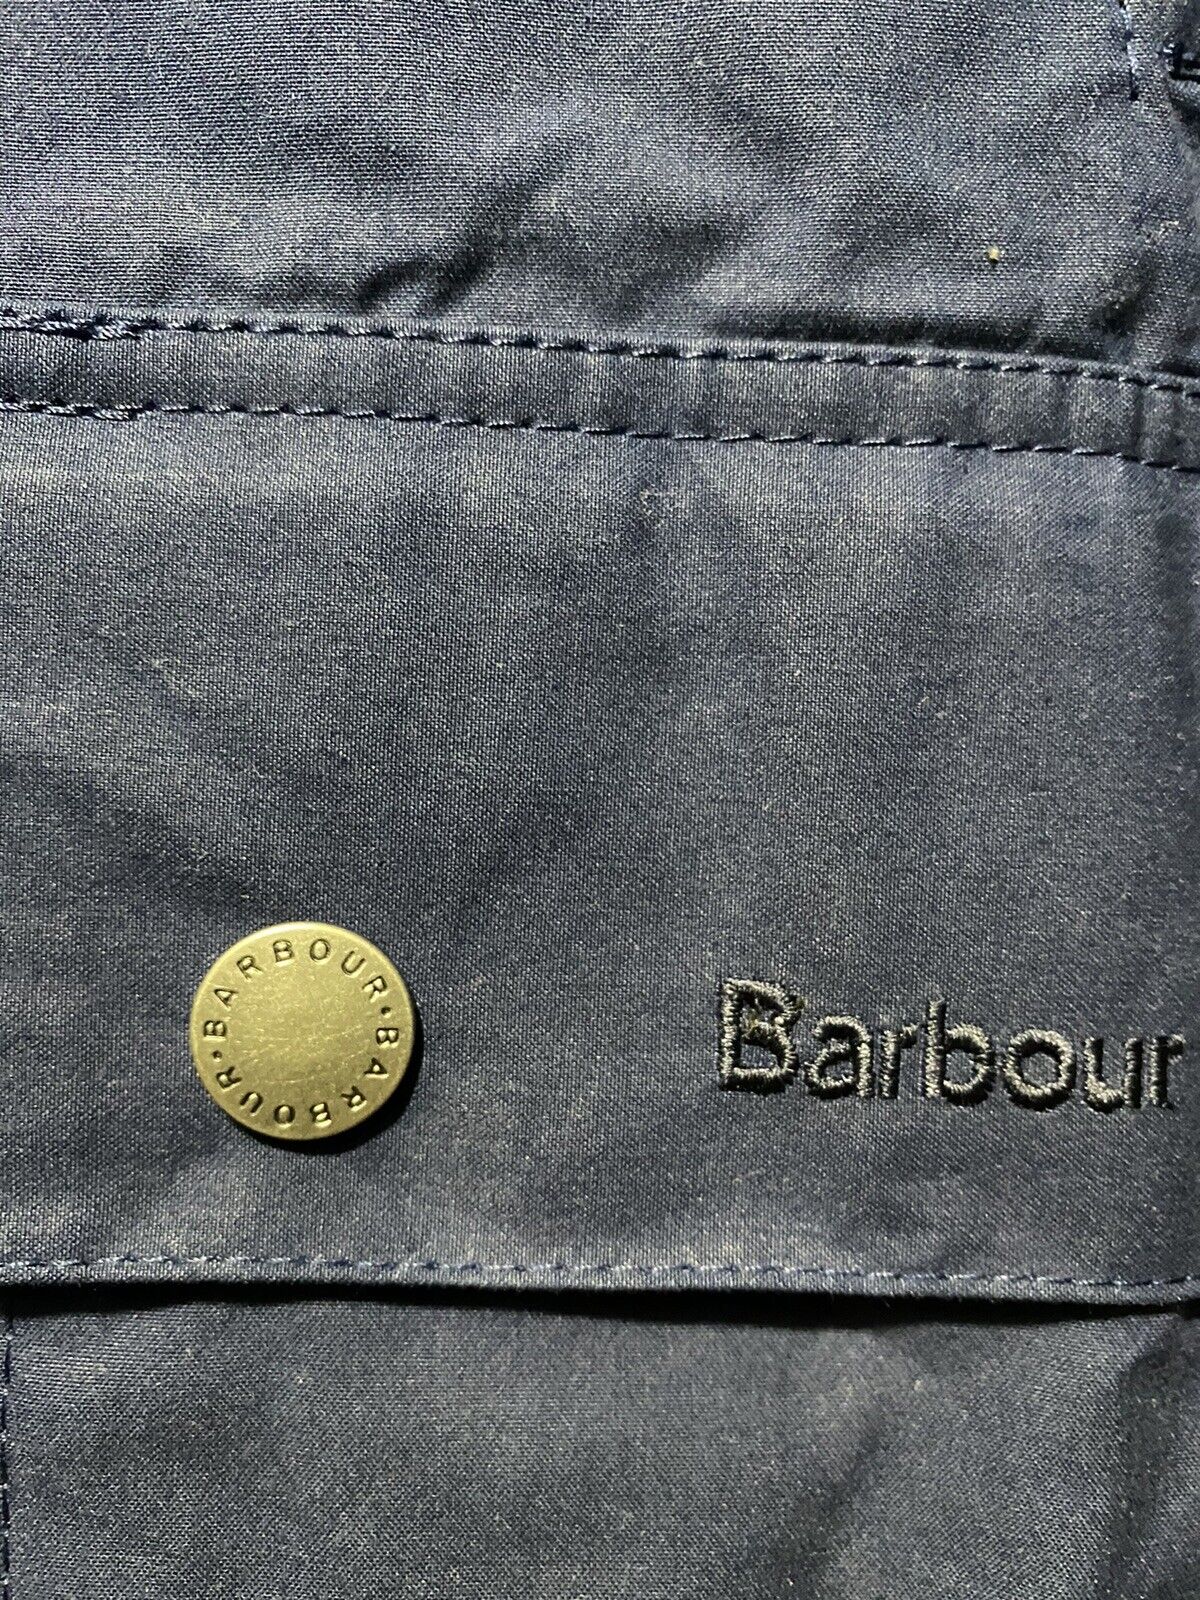 Barbour Noah Popeye Bedale Cotton Dry Wax Work Rain Jacket Coat